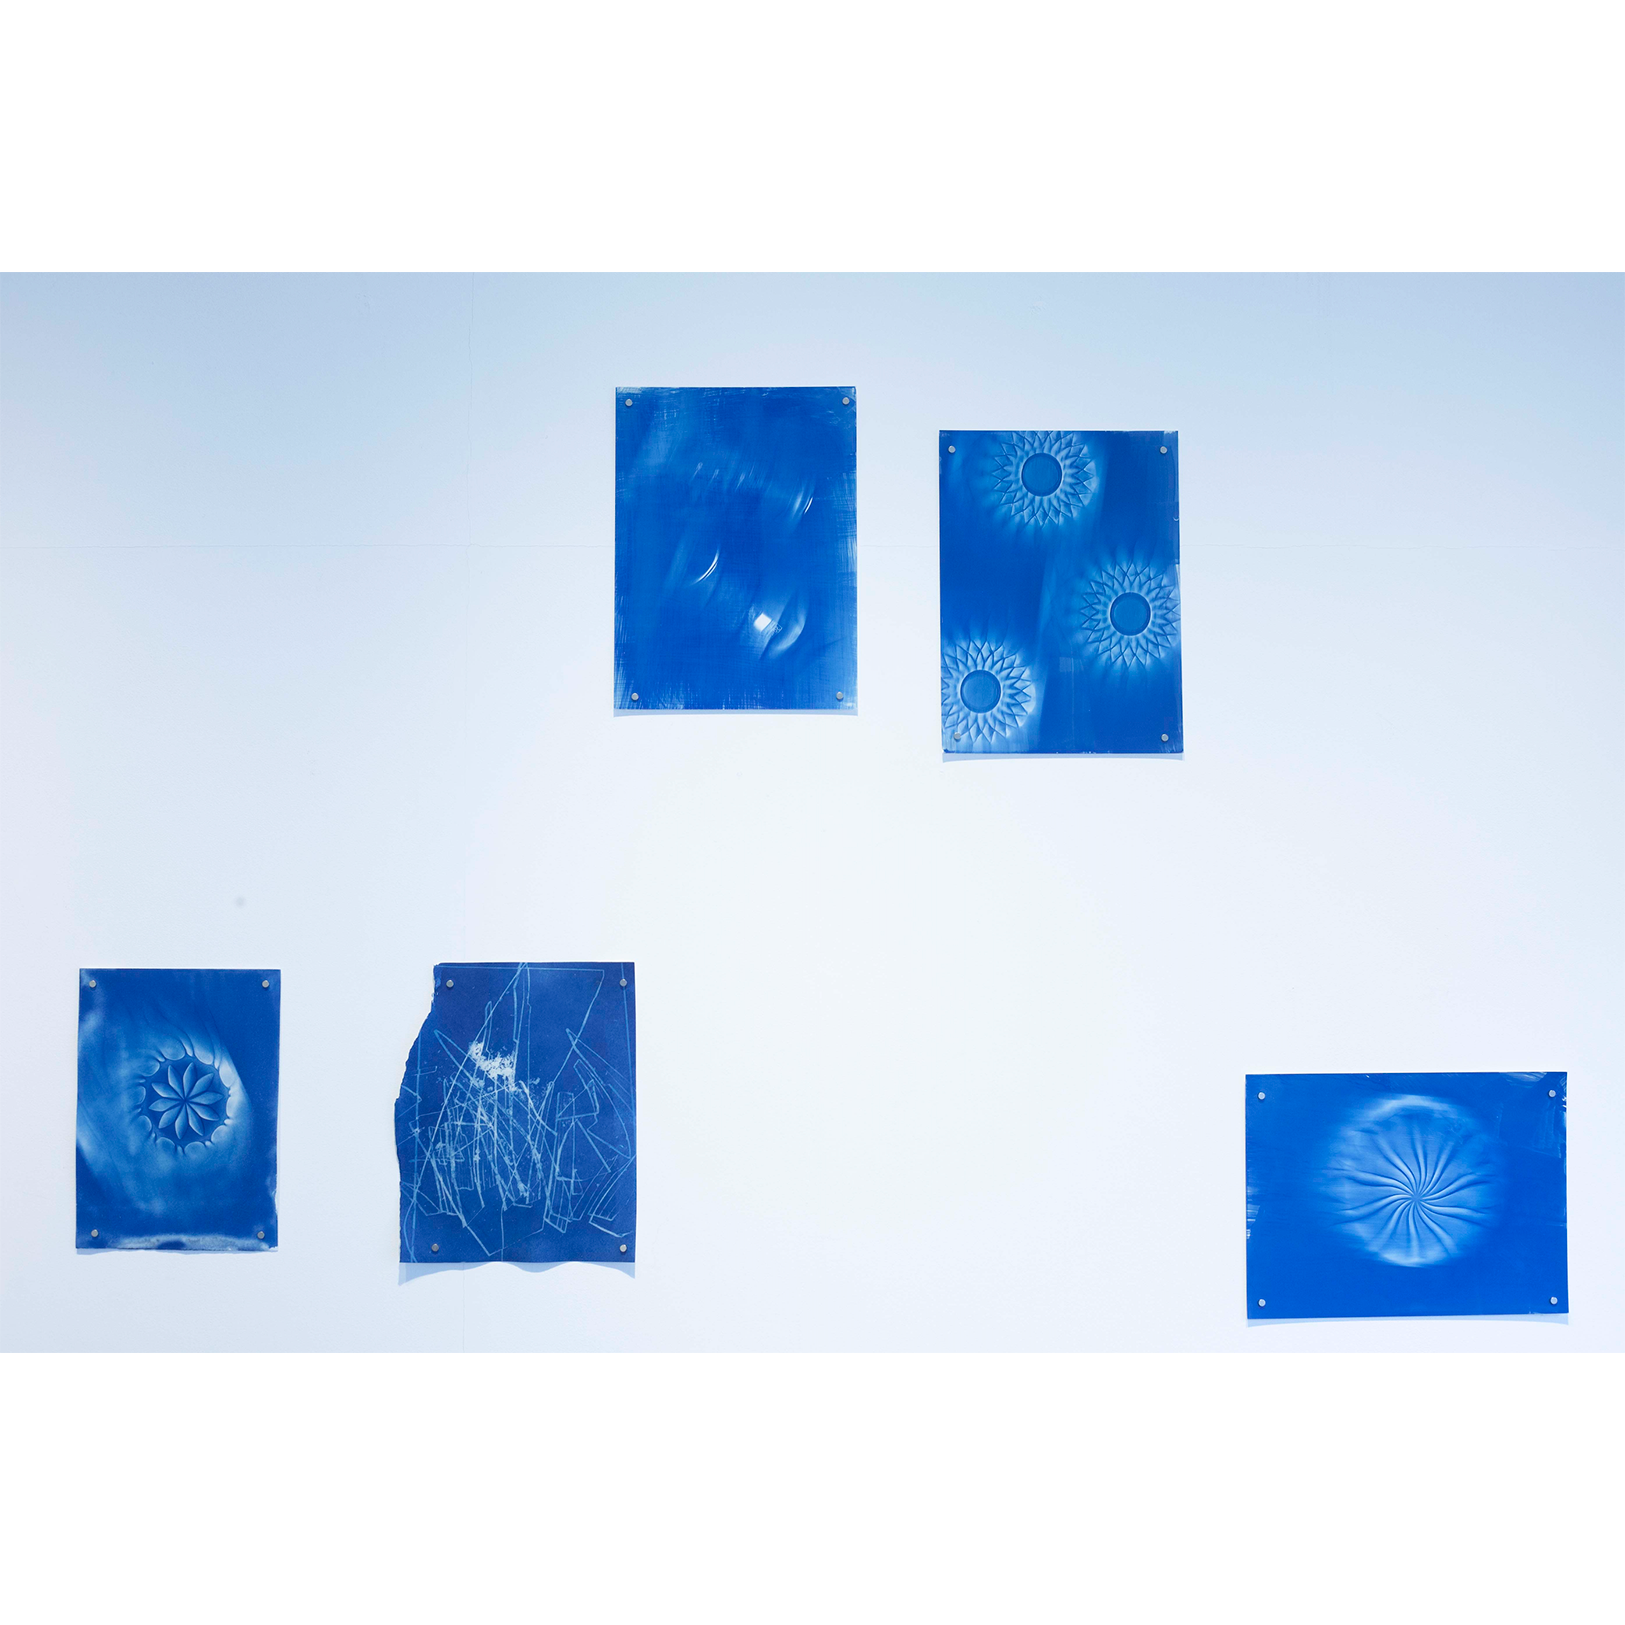 Jens Sundheim<br>《unique cyano type prints》002